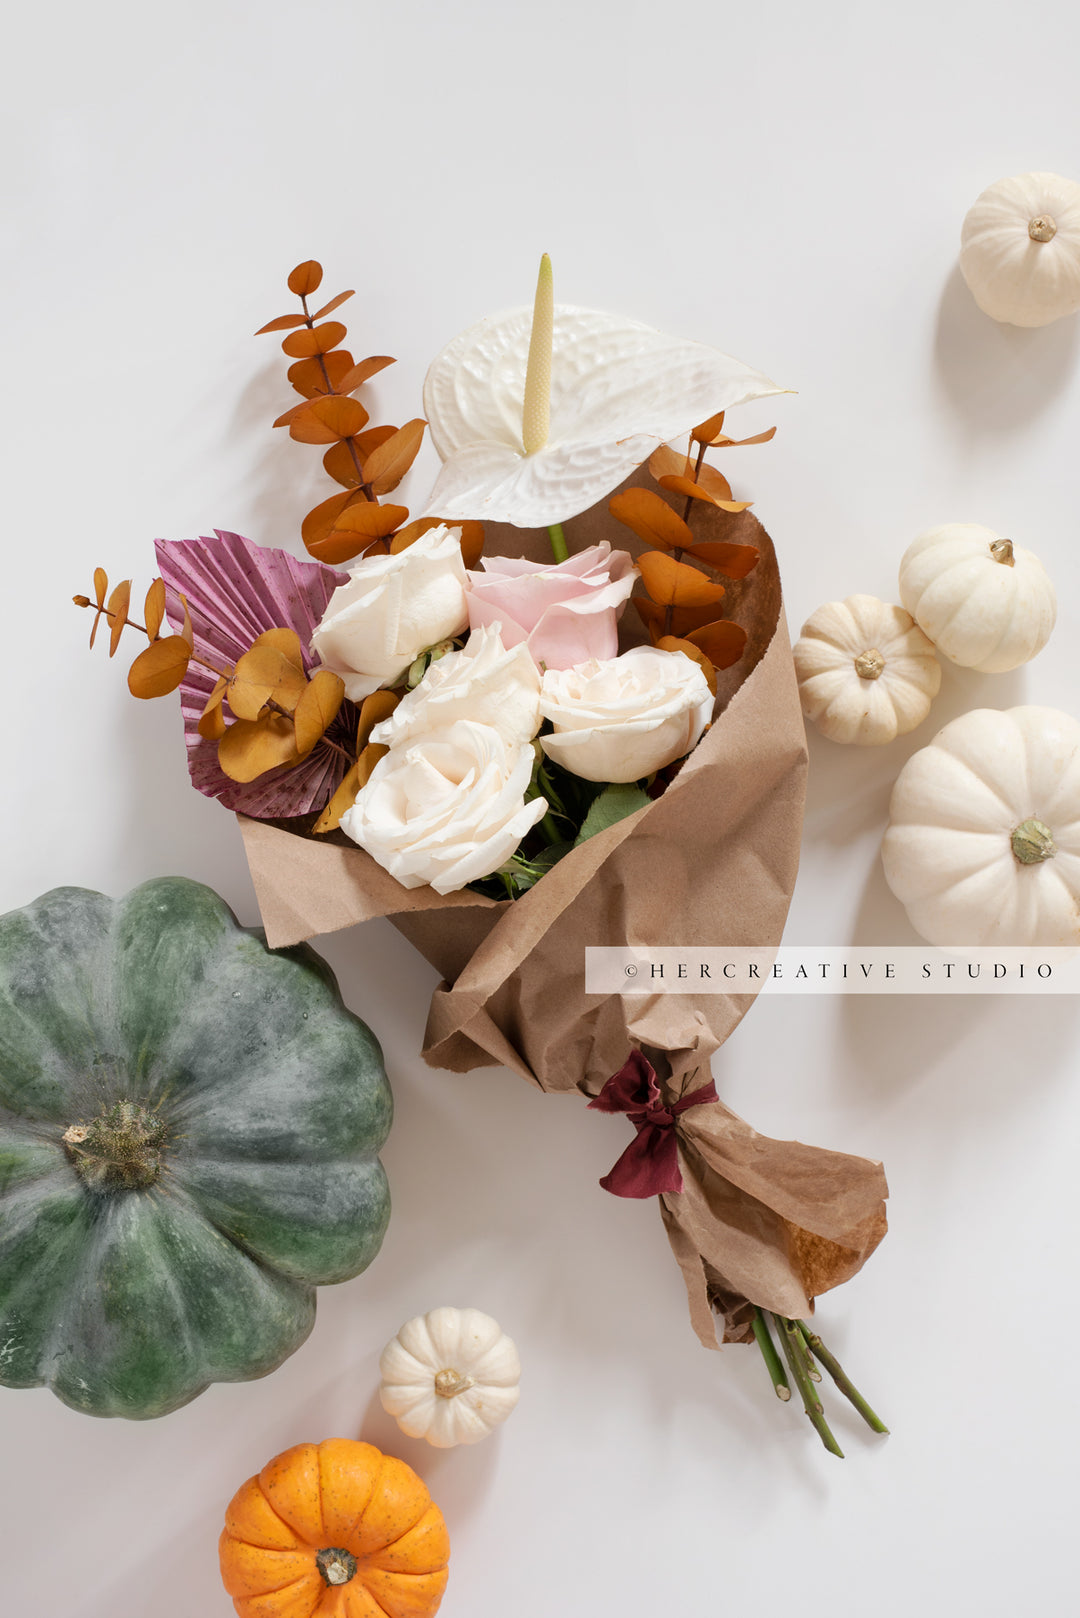 Pumpkins & Bouquet of Fall Flowers. Digital Stock Image.